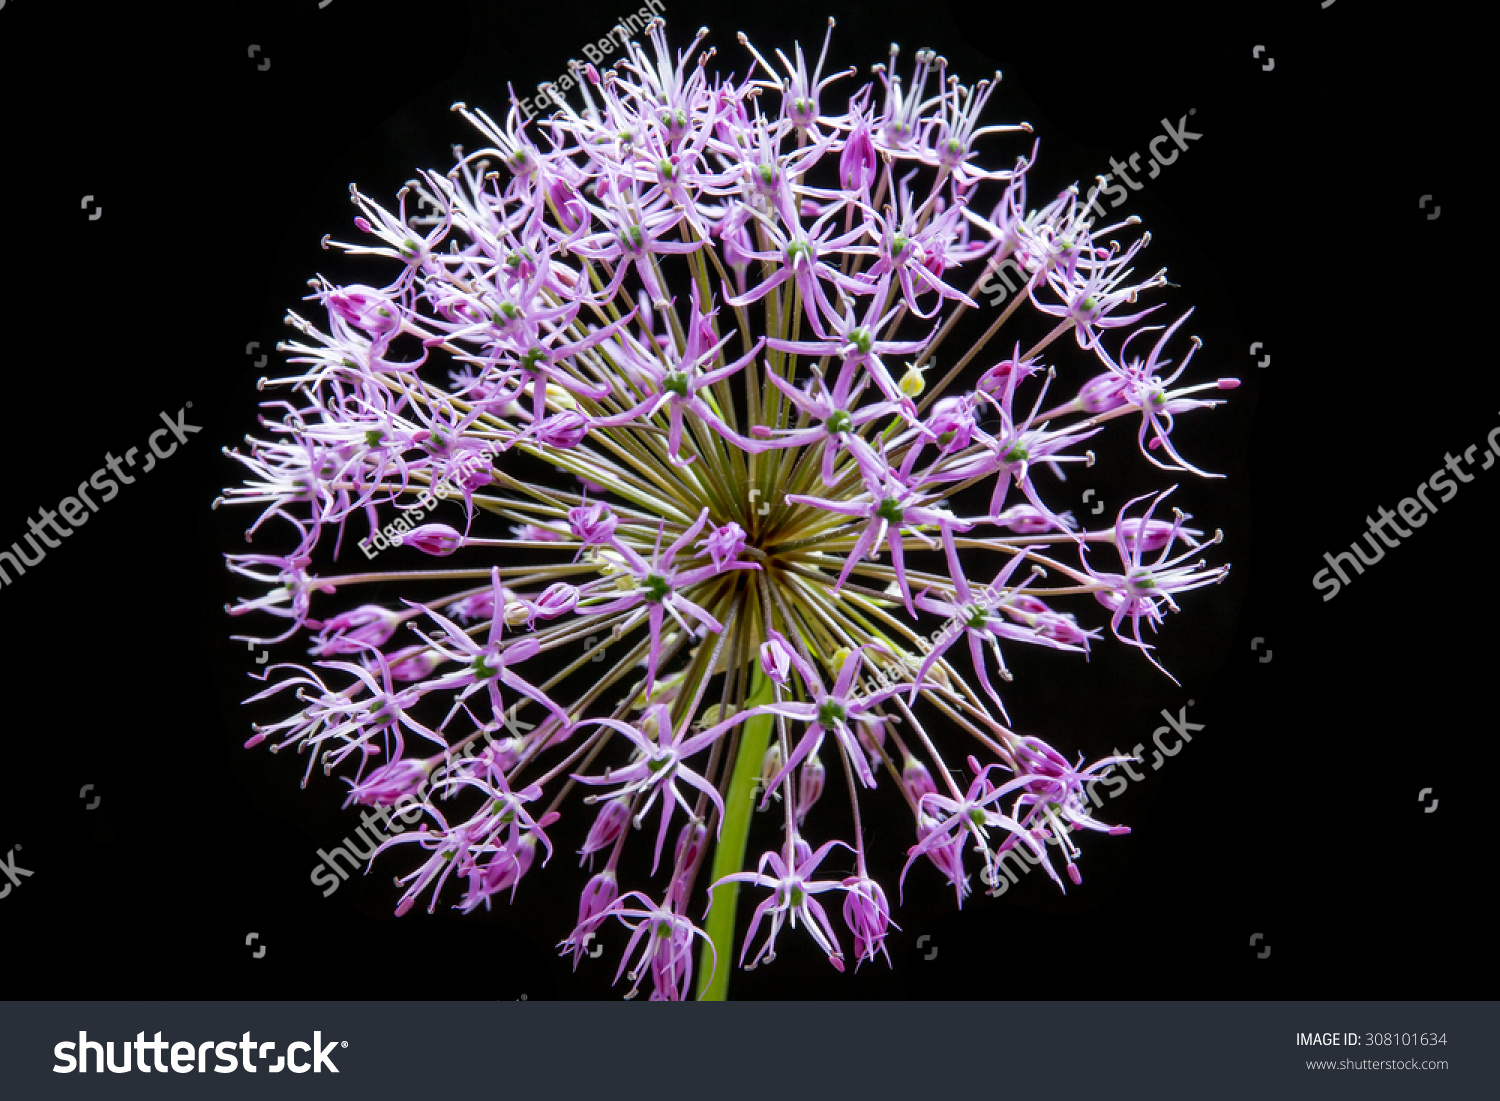 Allium Flower Isolated On Black Background Stock Photo Edit Now 308101634